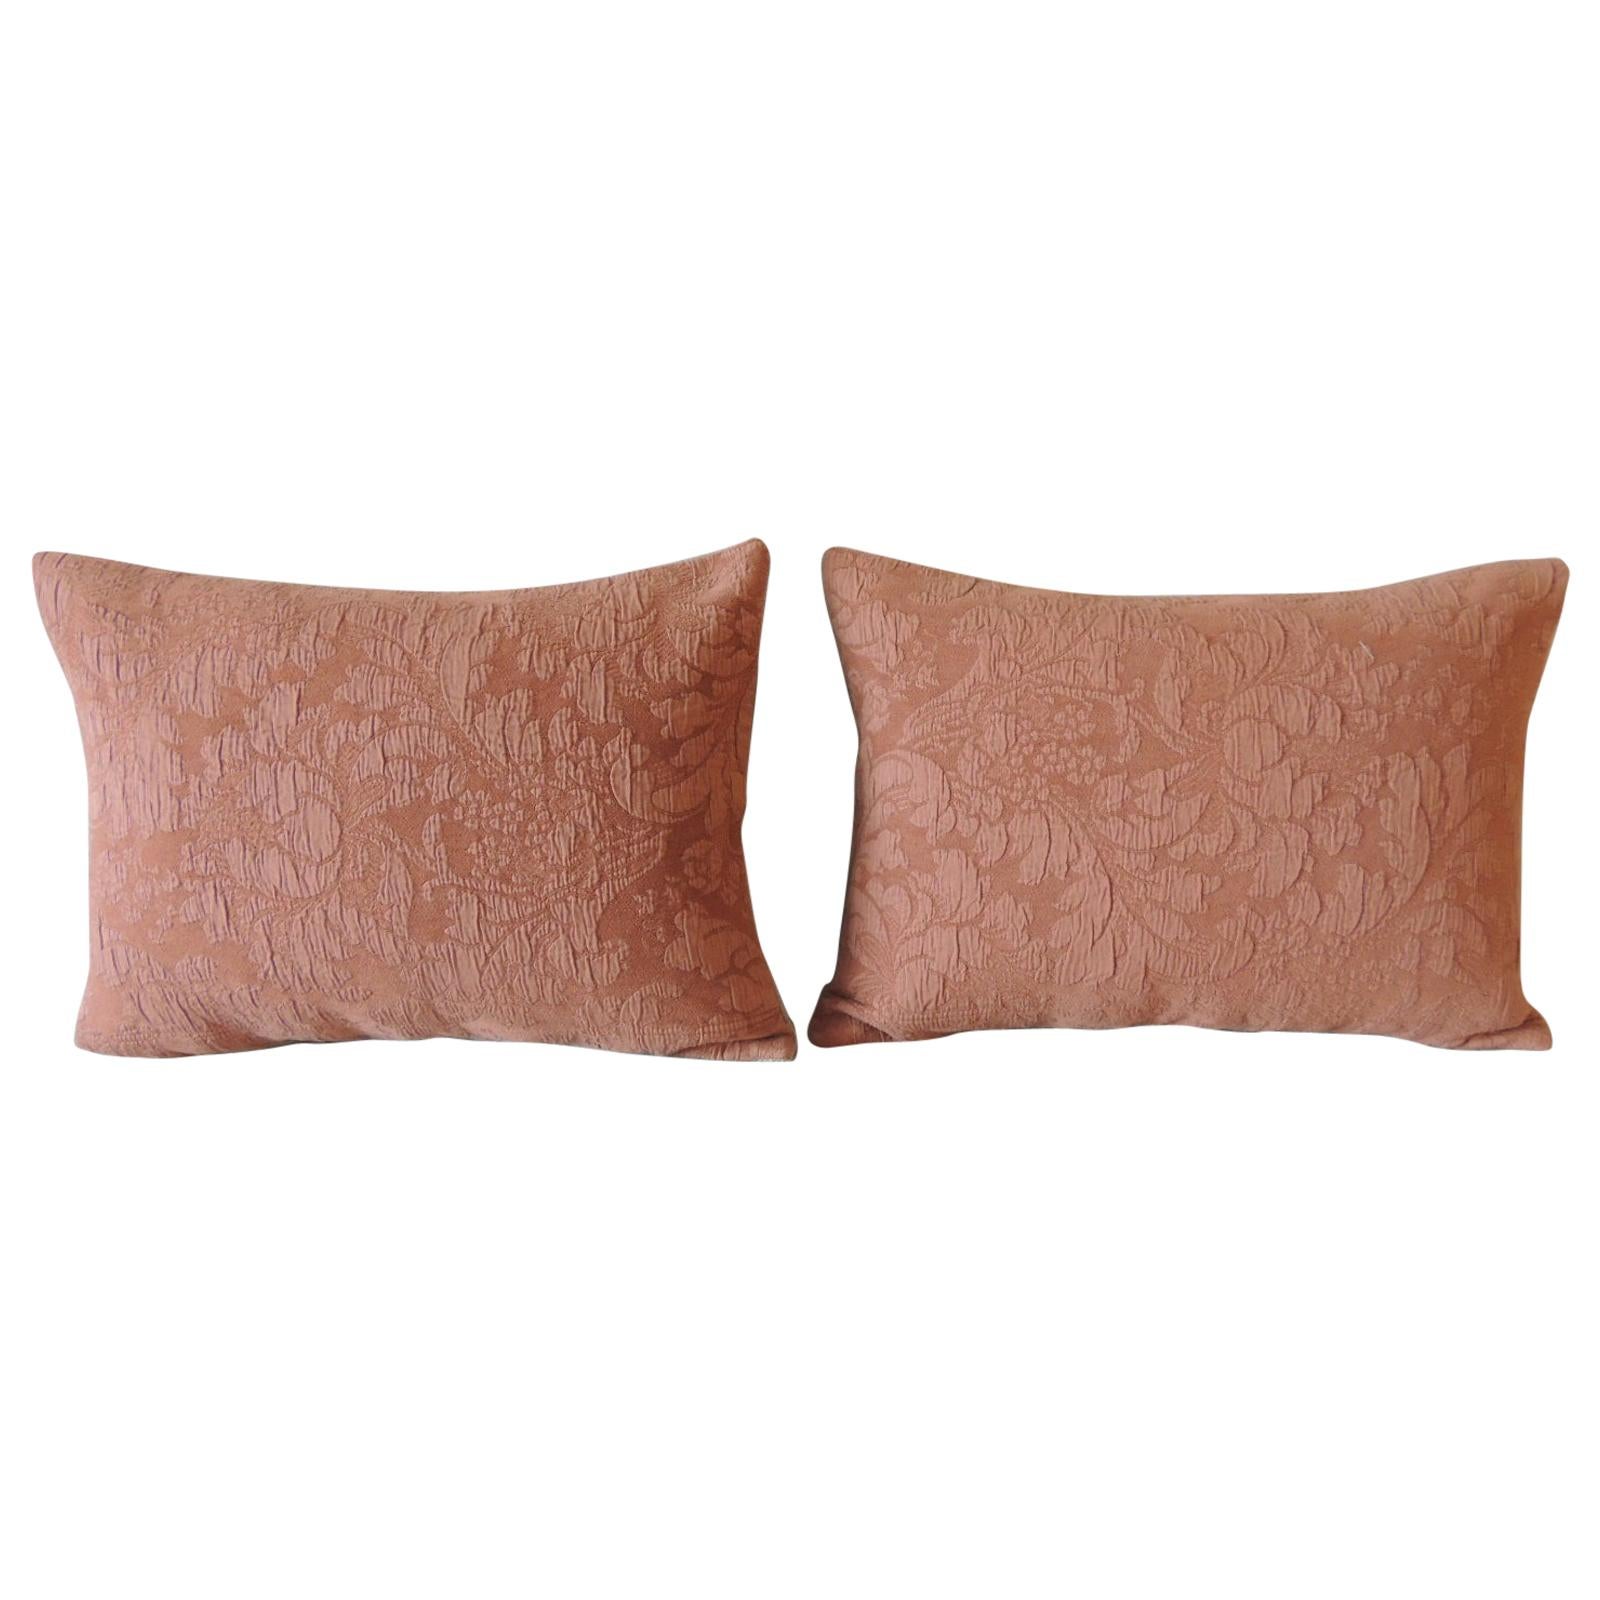 Pair of Modern Dusty Pink Tone-on-Tone Matelassé Bolster Decorative Pillows